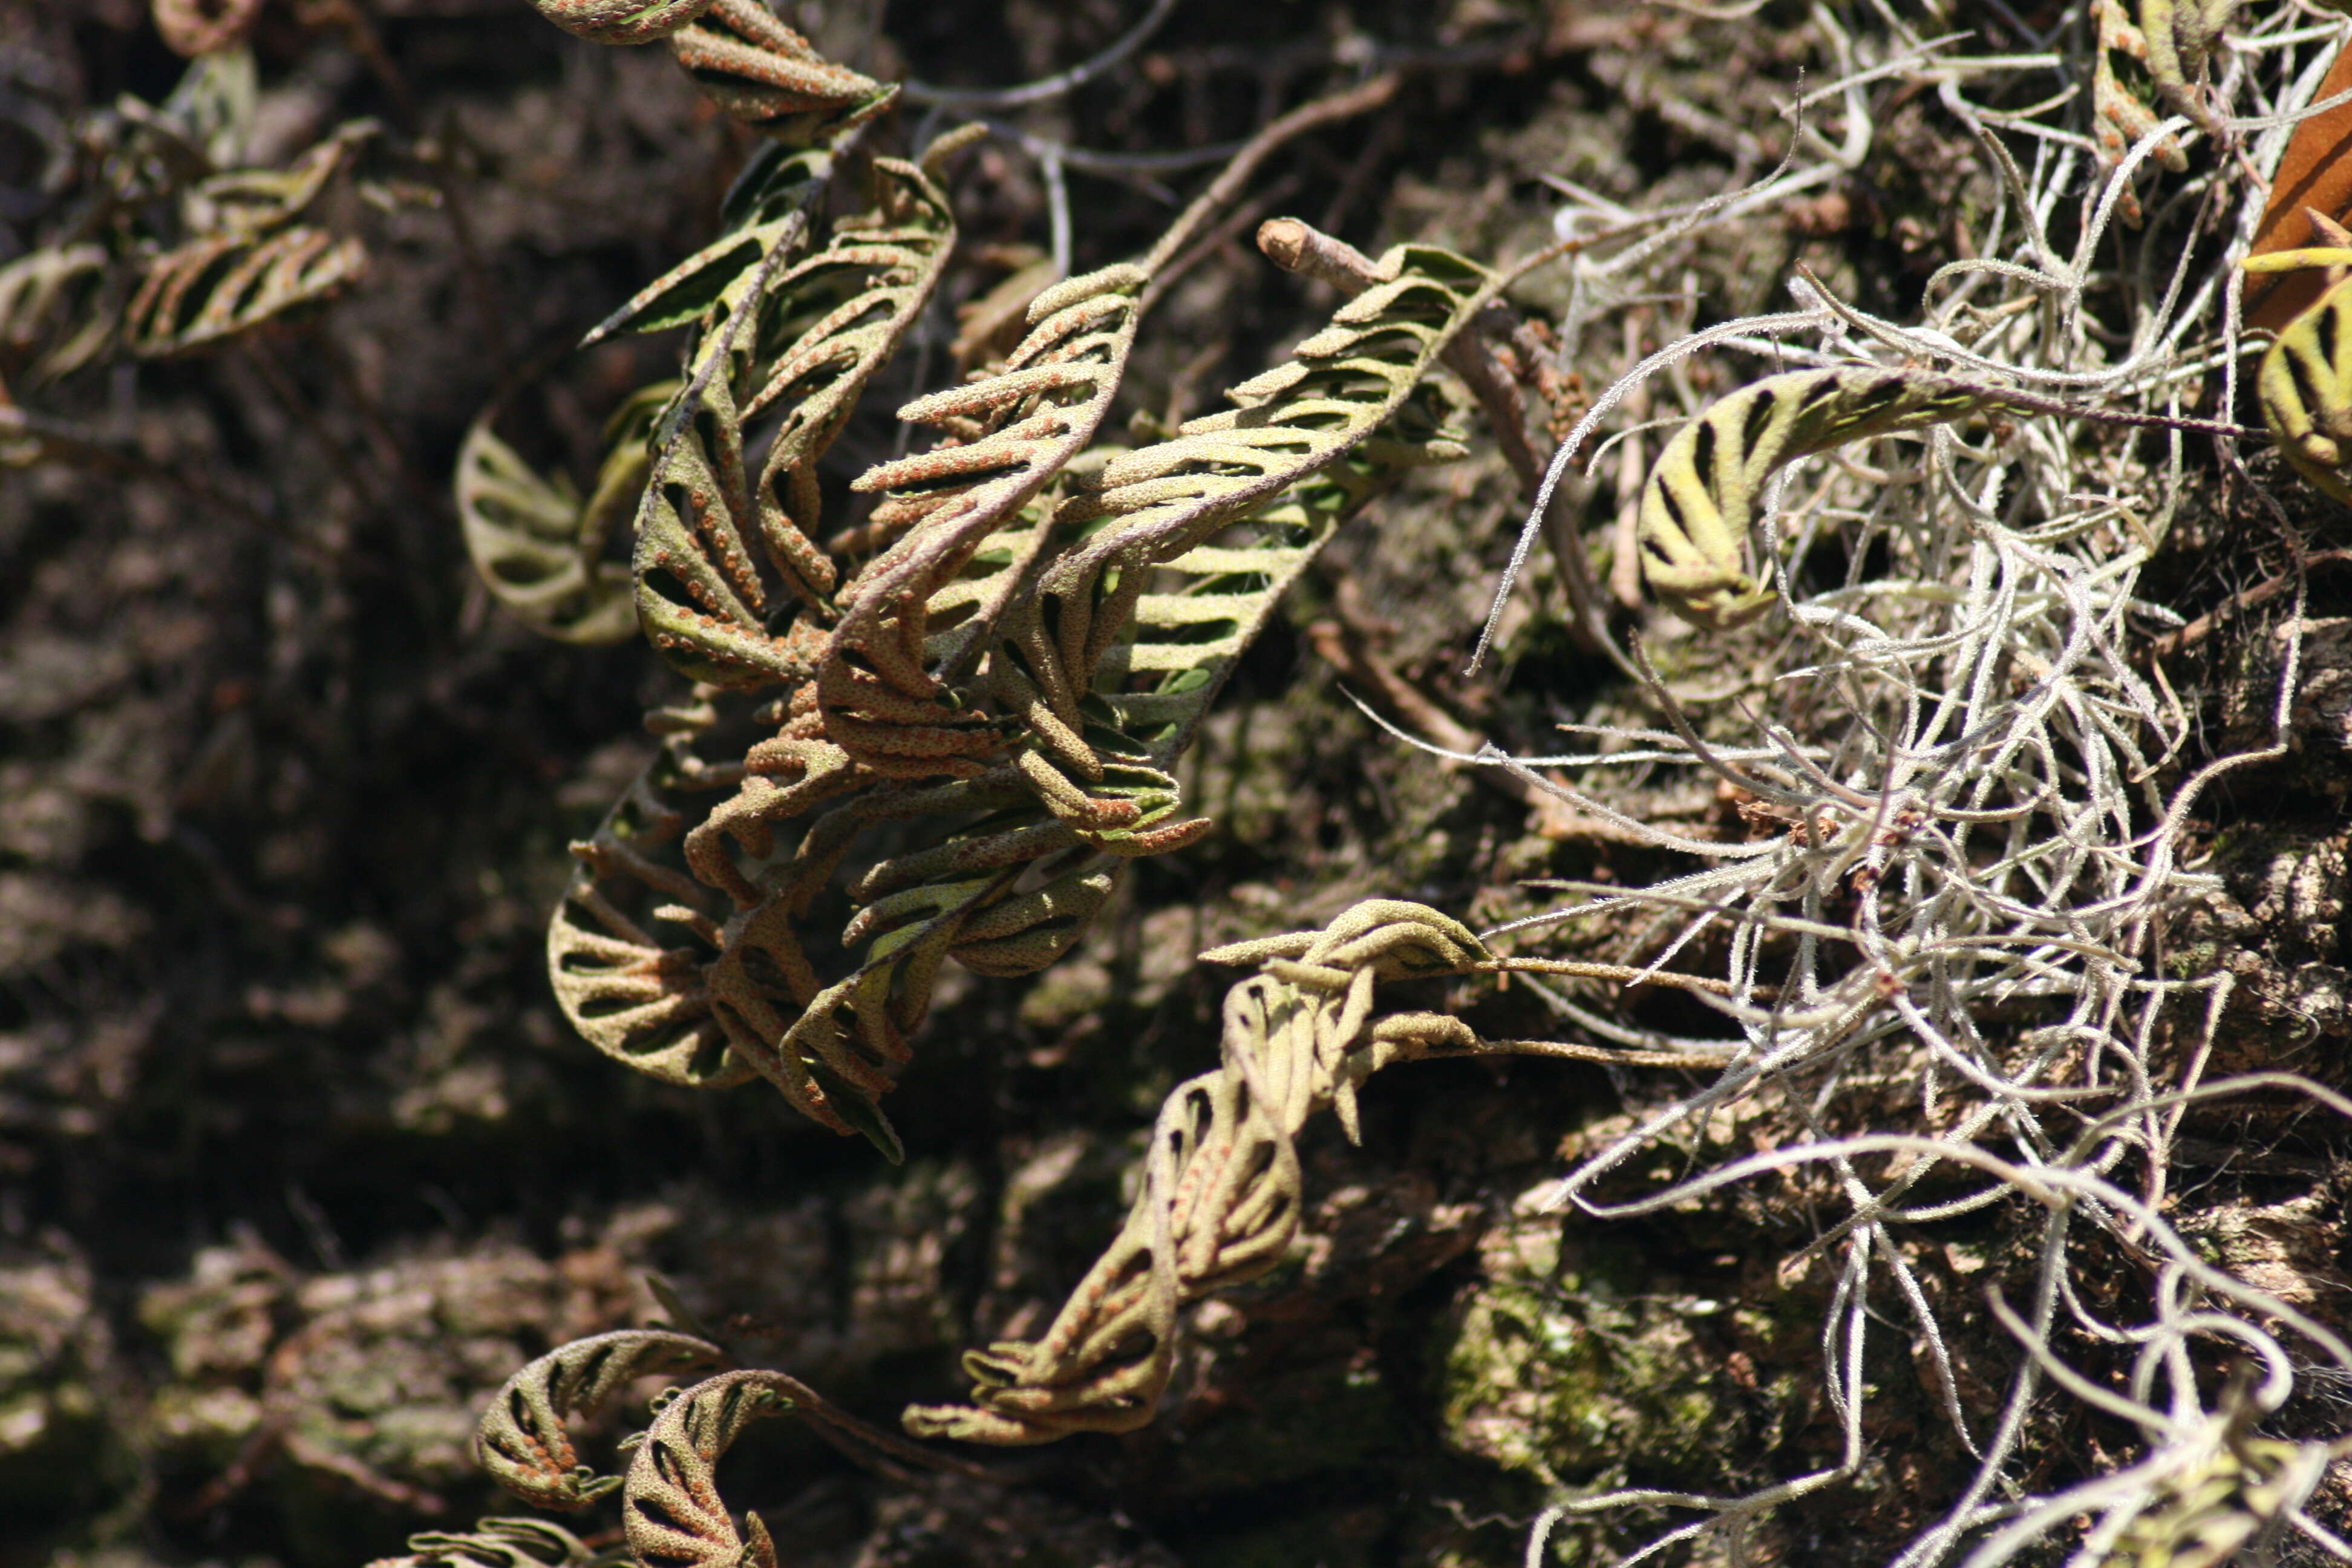 Image of resurrection fern